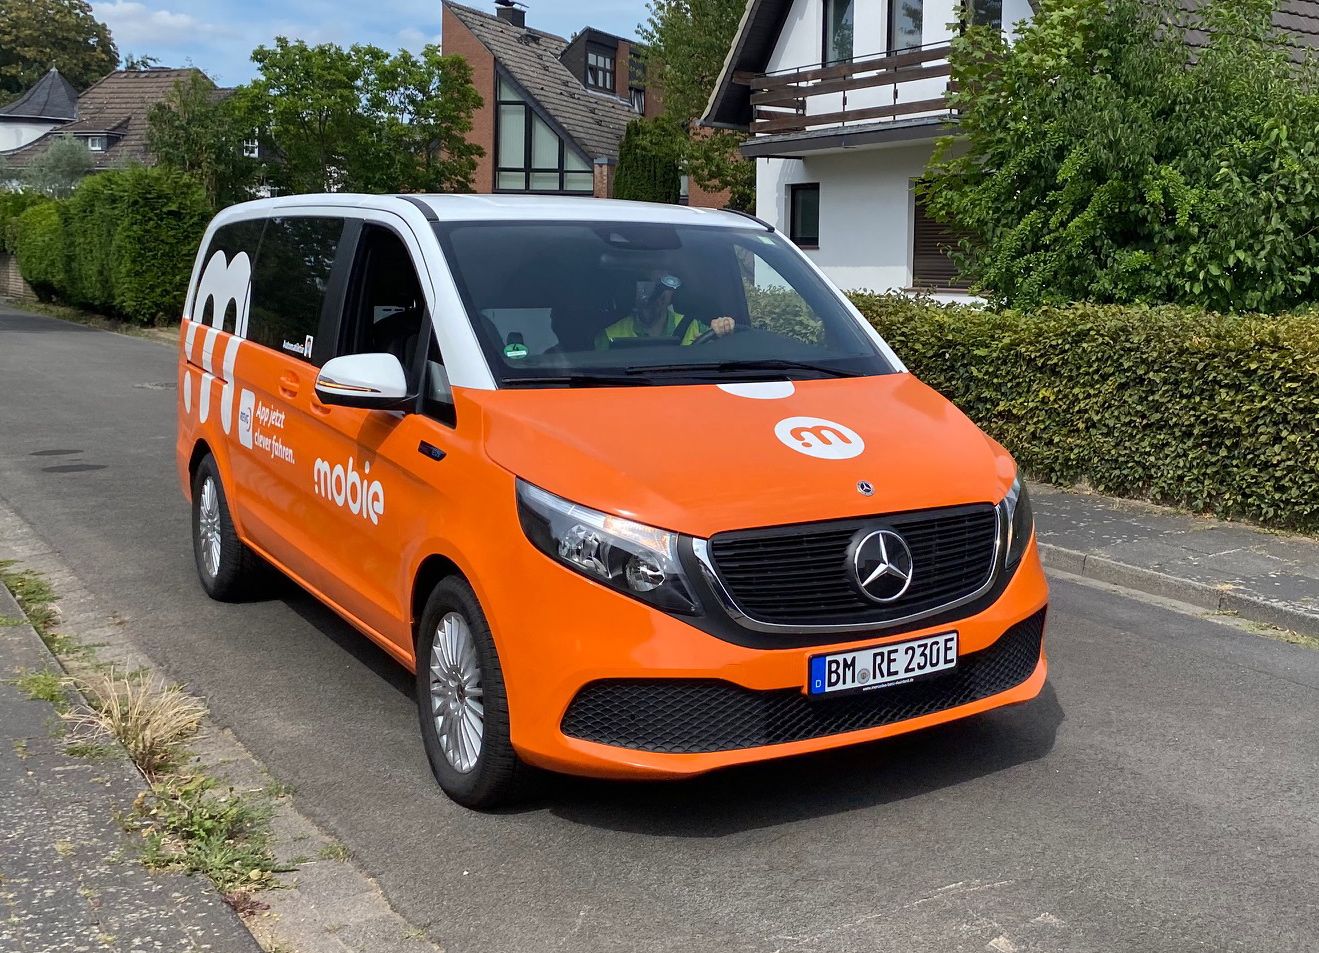 mobie“ - on-demand service by REVG in Erftstadt - Urban Transport